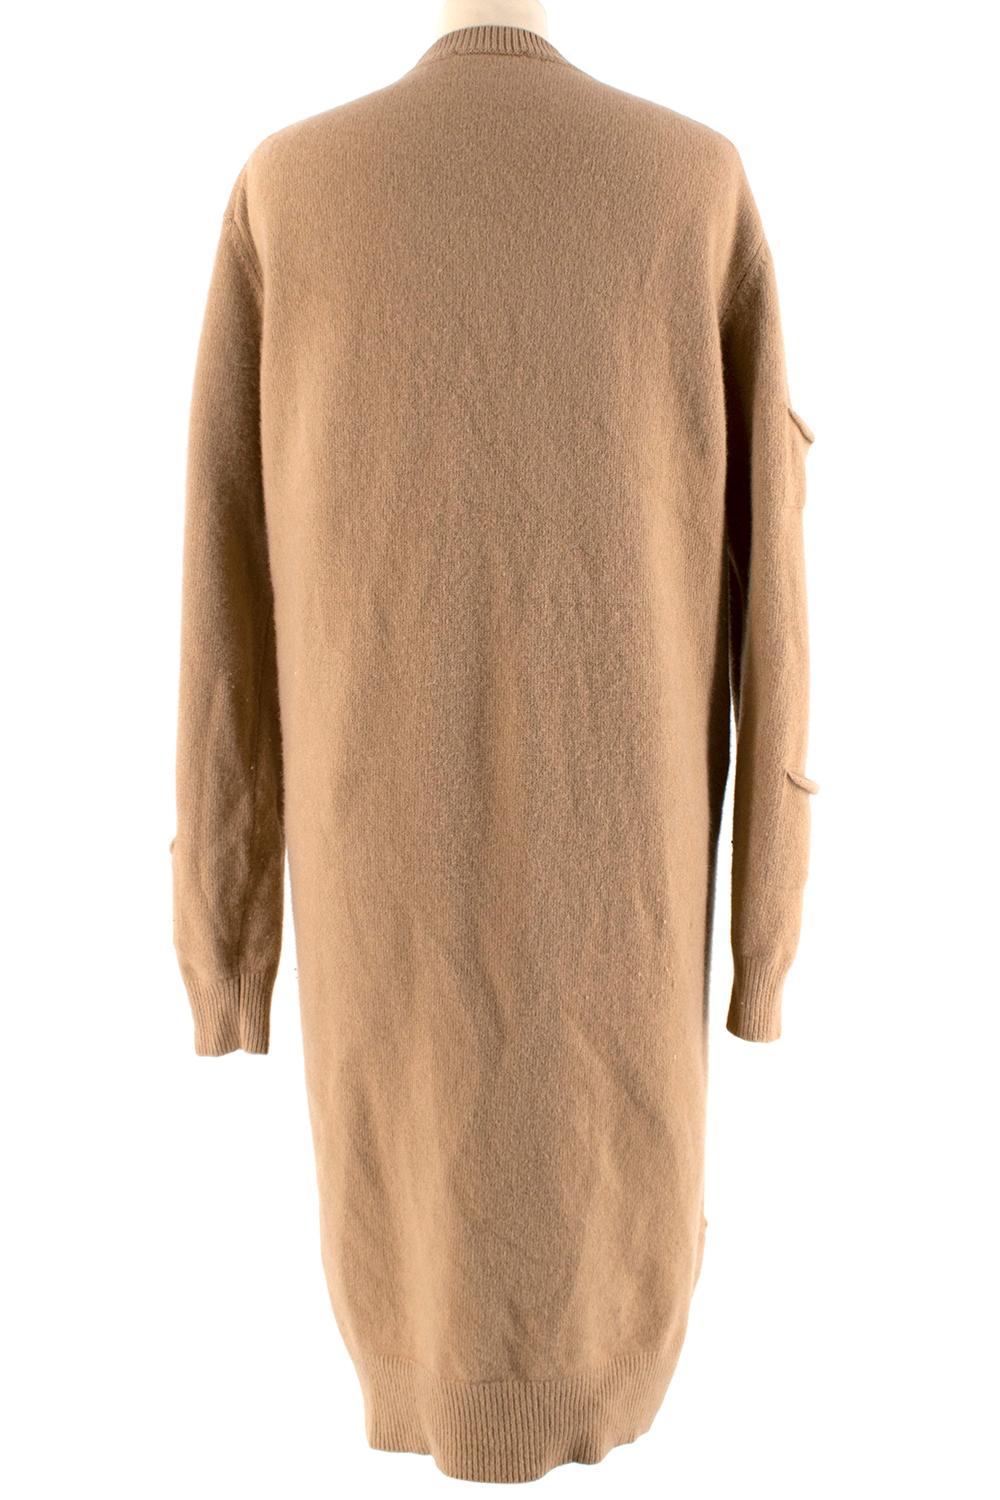 camel wool dress